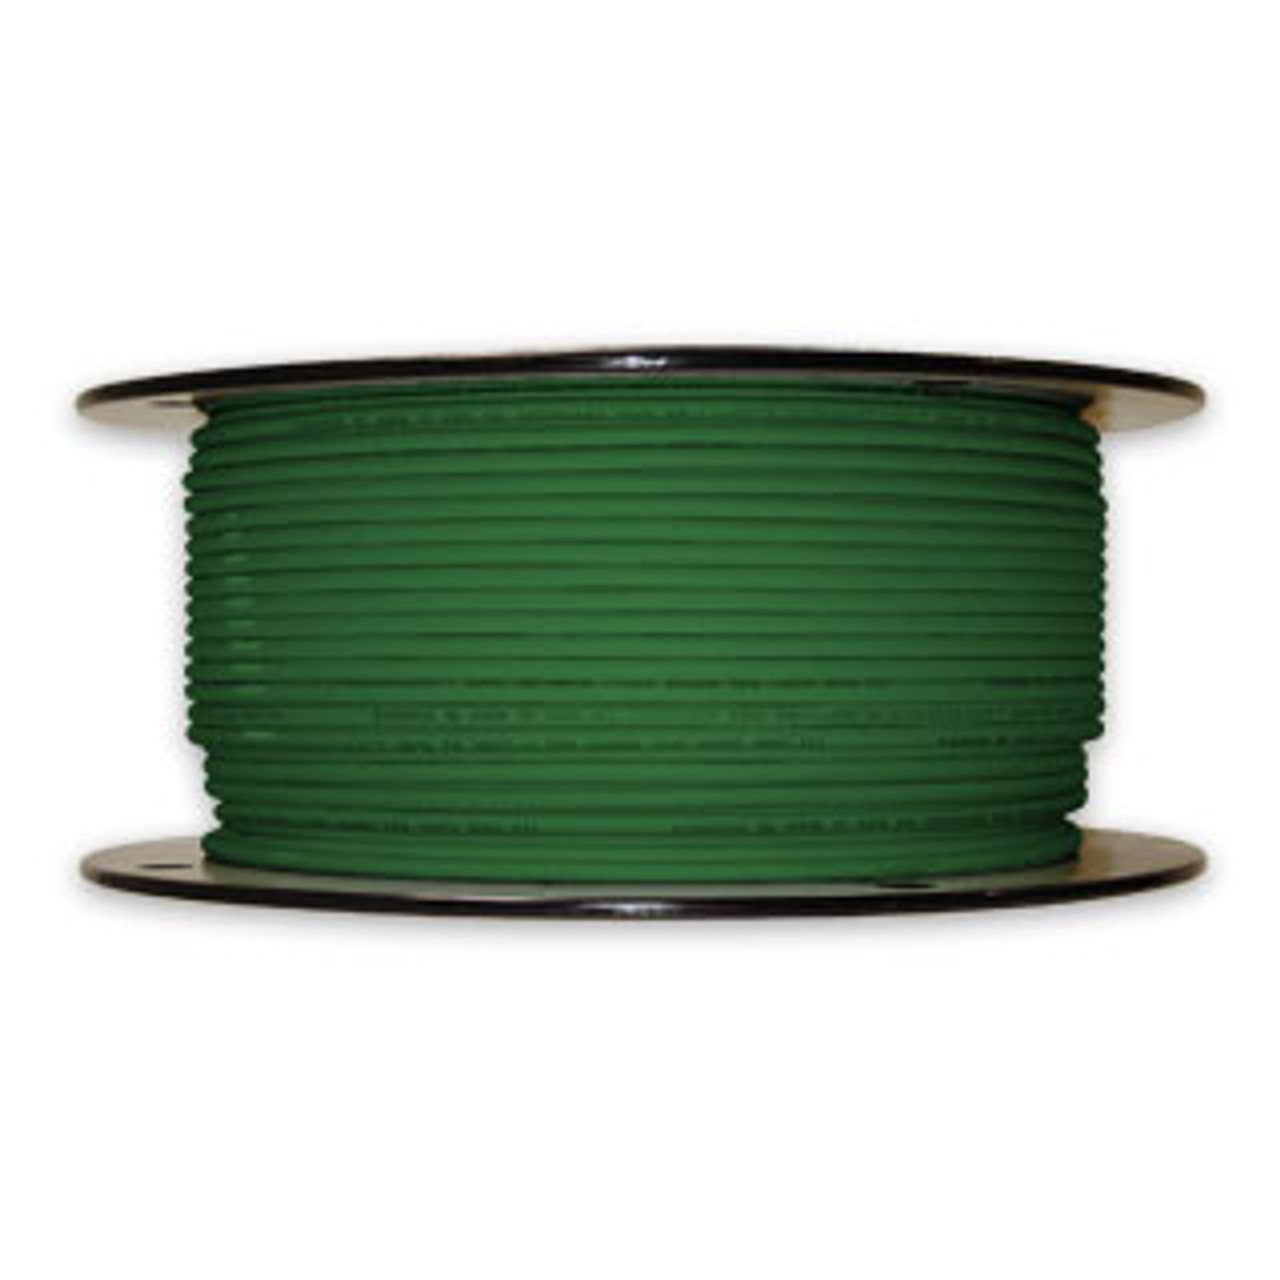 100' 18 Gauge Wire Roll, Green